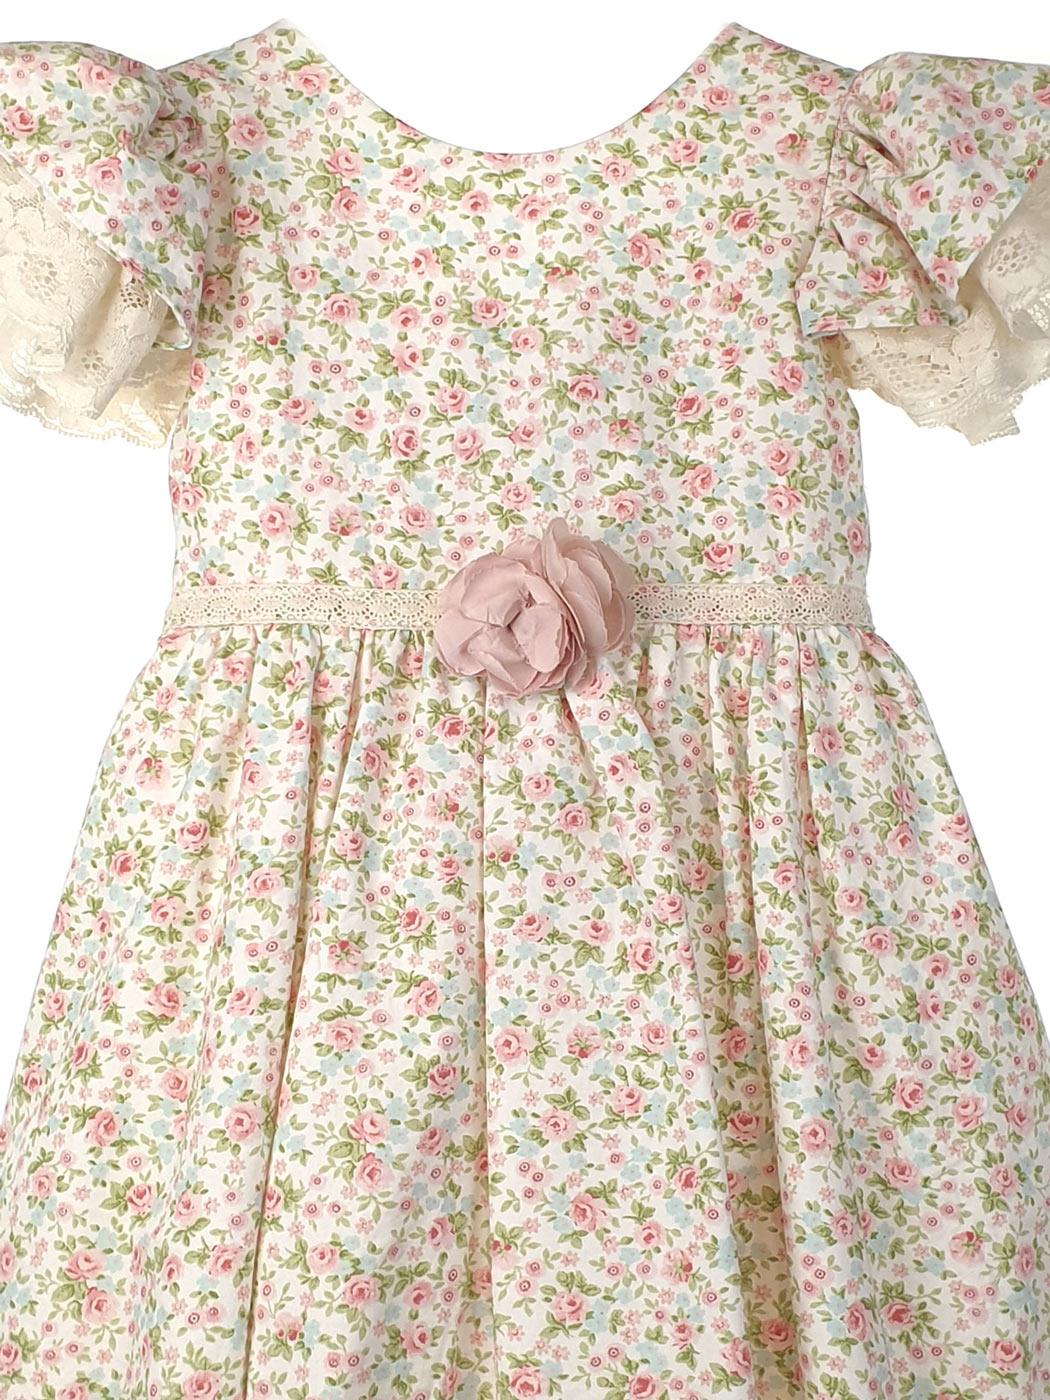 Designer's Cat-Girl's floral dress - LORA